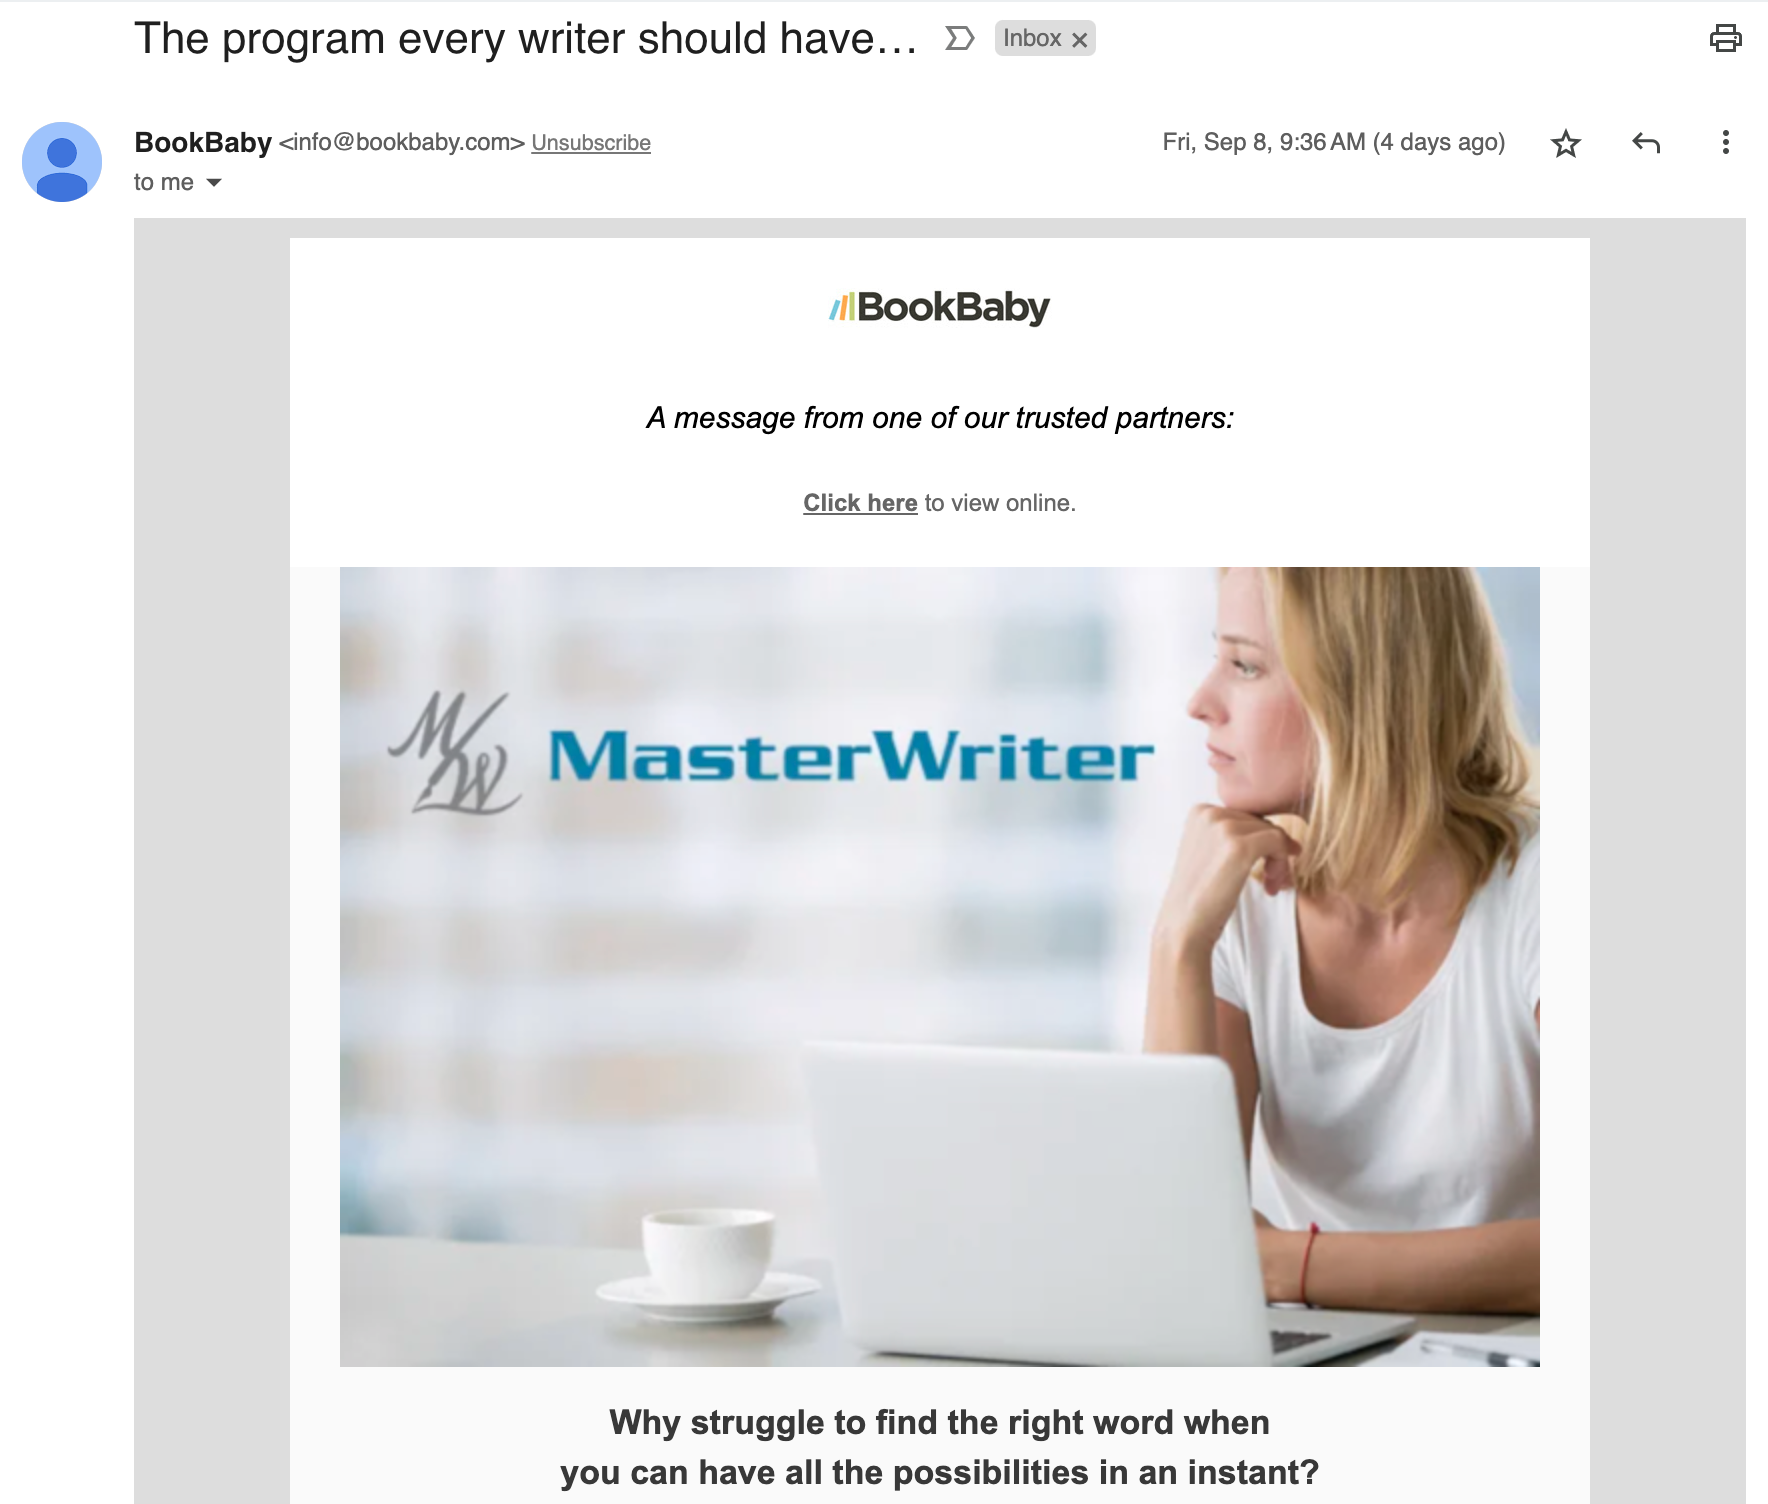 Email blast from BookBaby